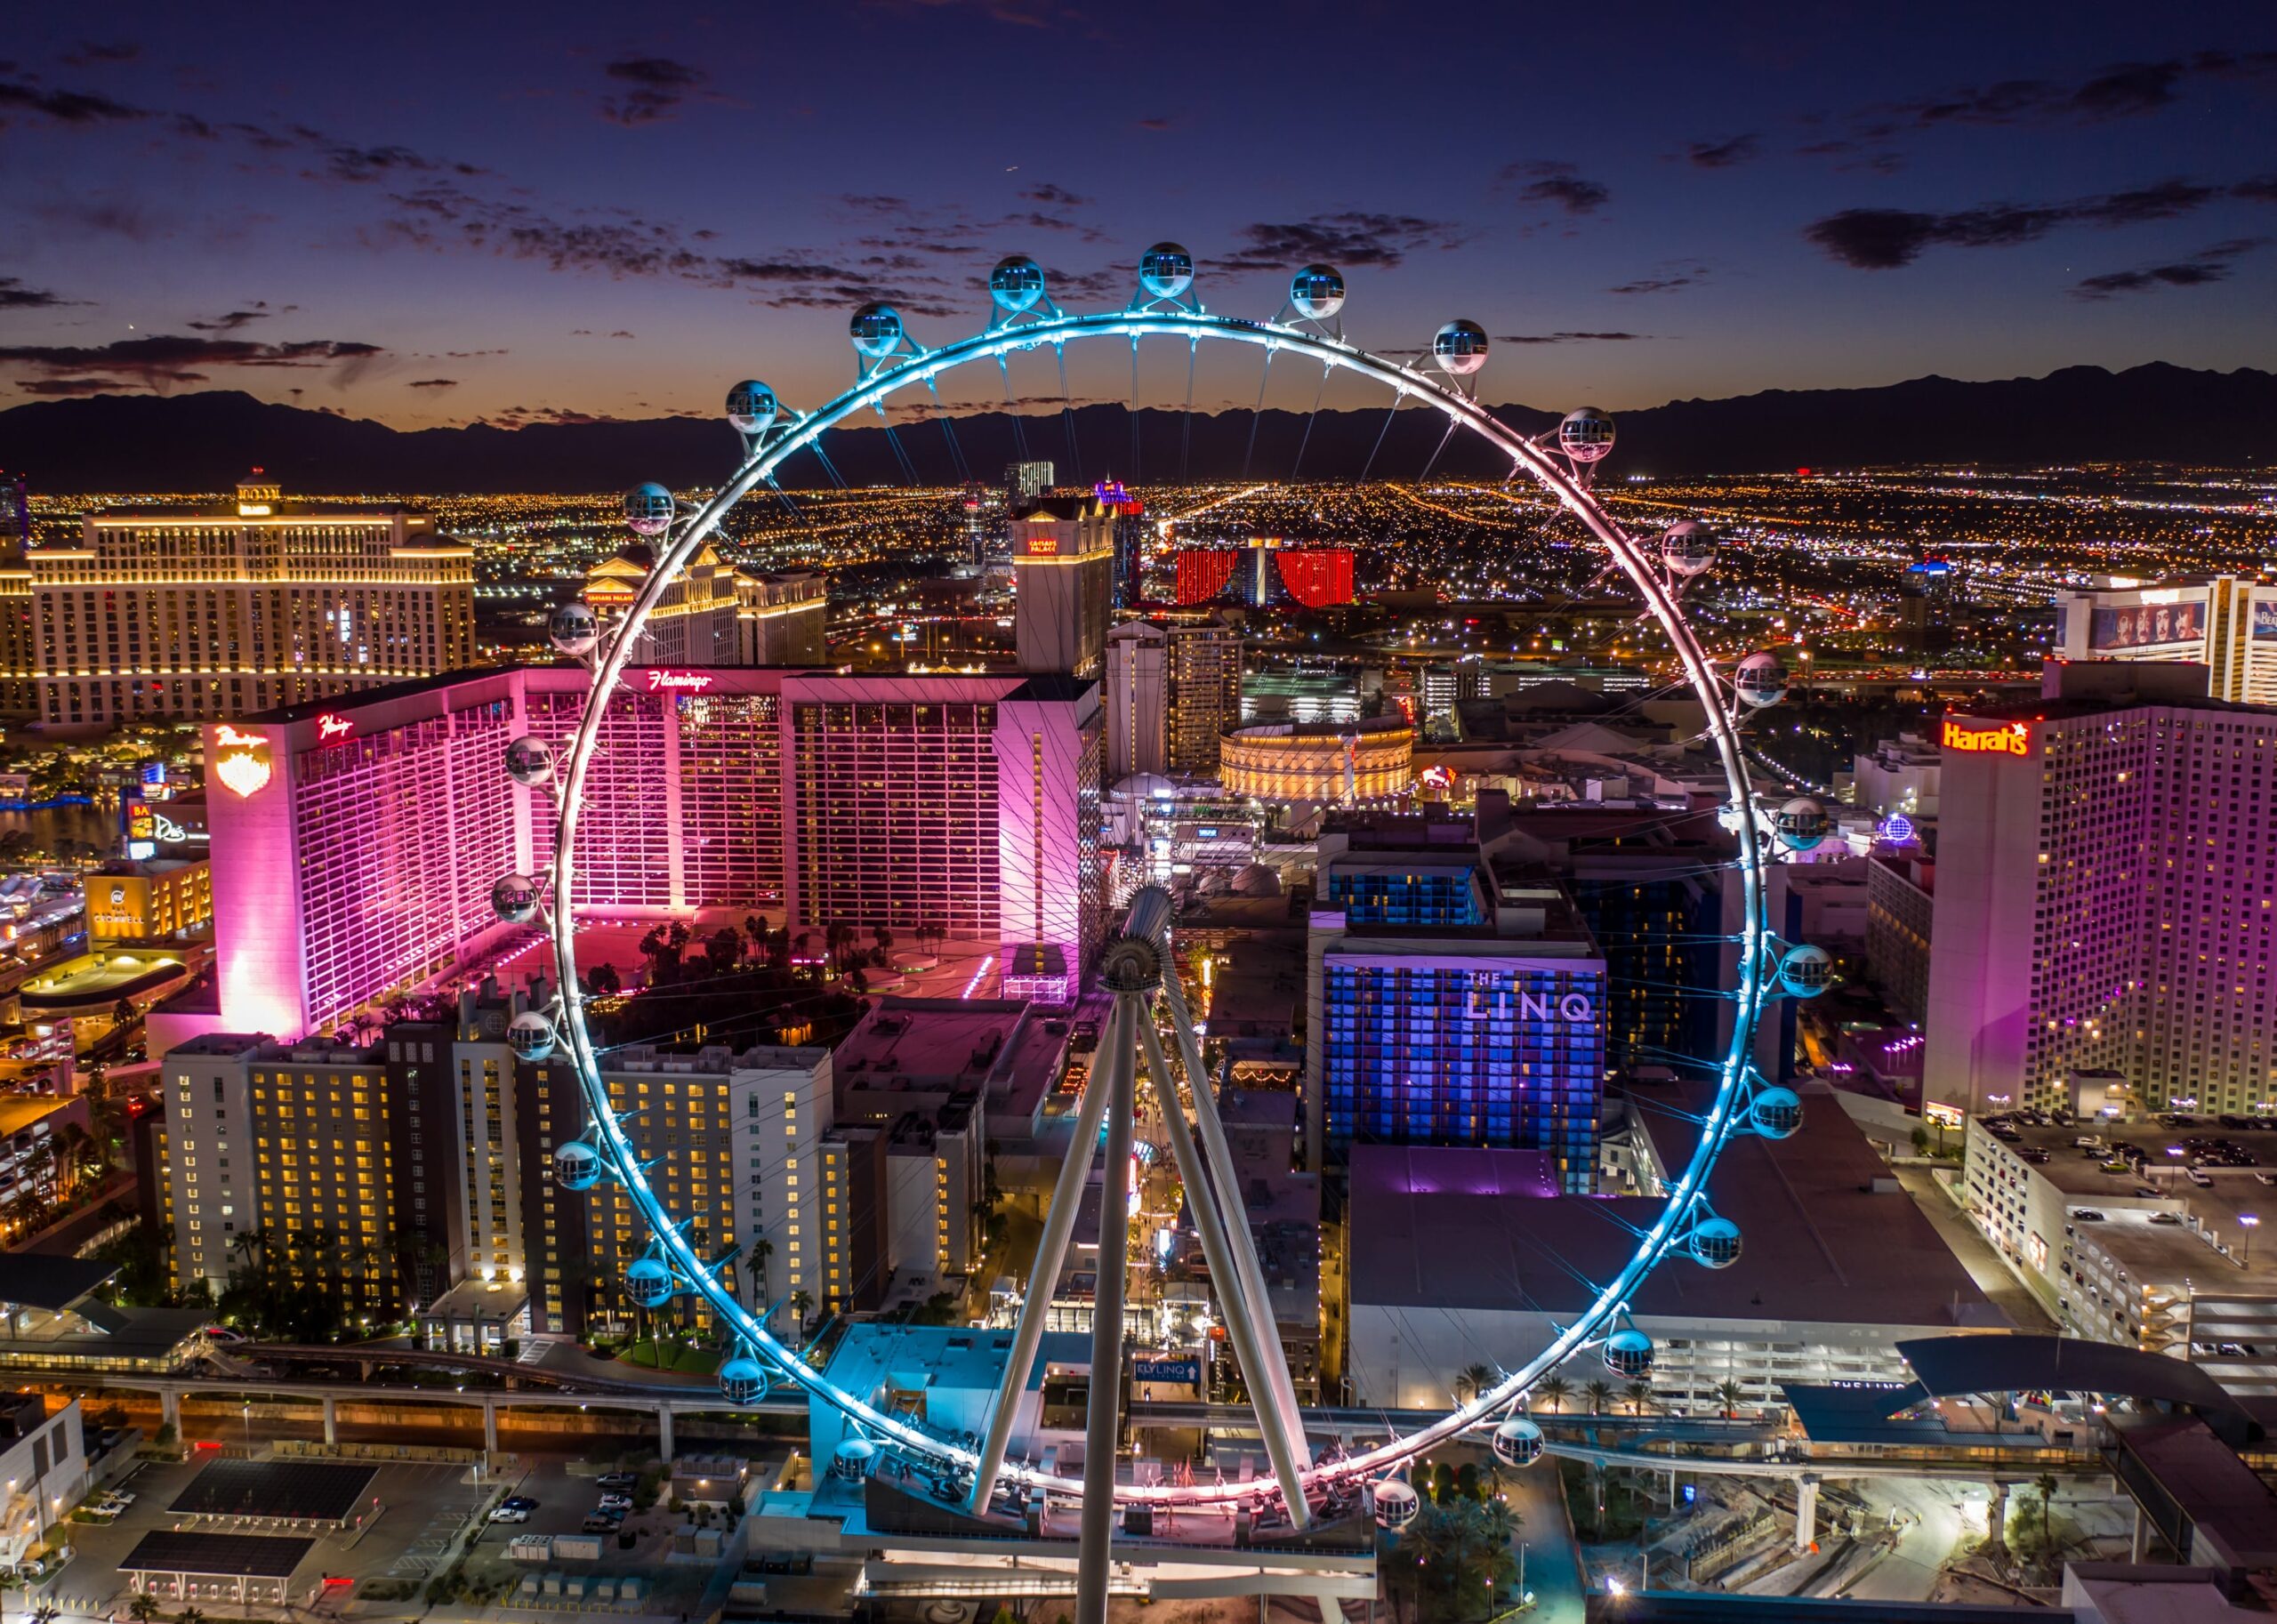 The High Roller in Las Vegas